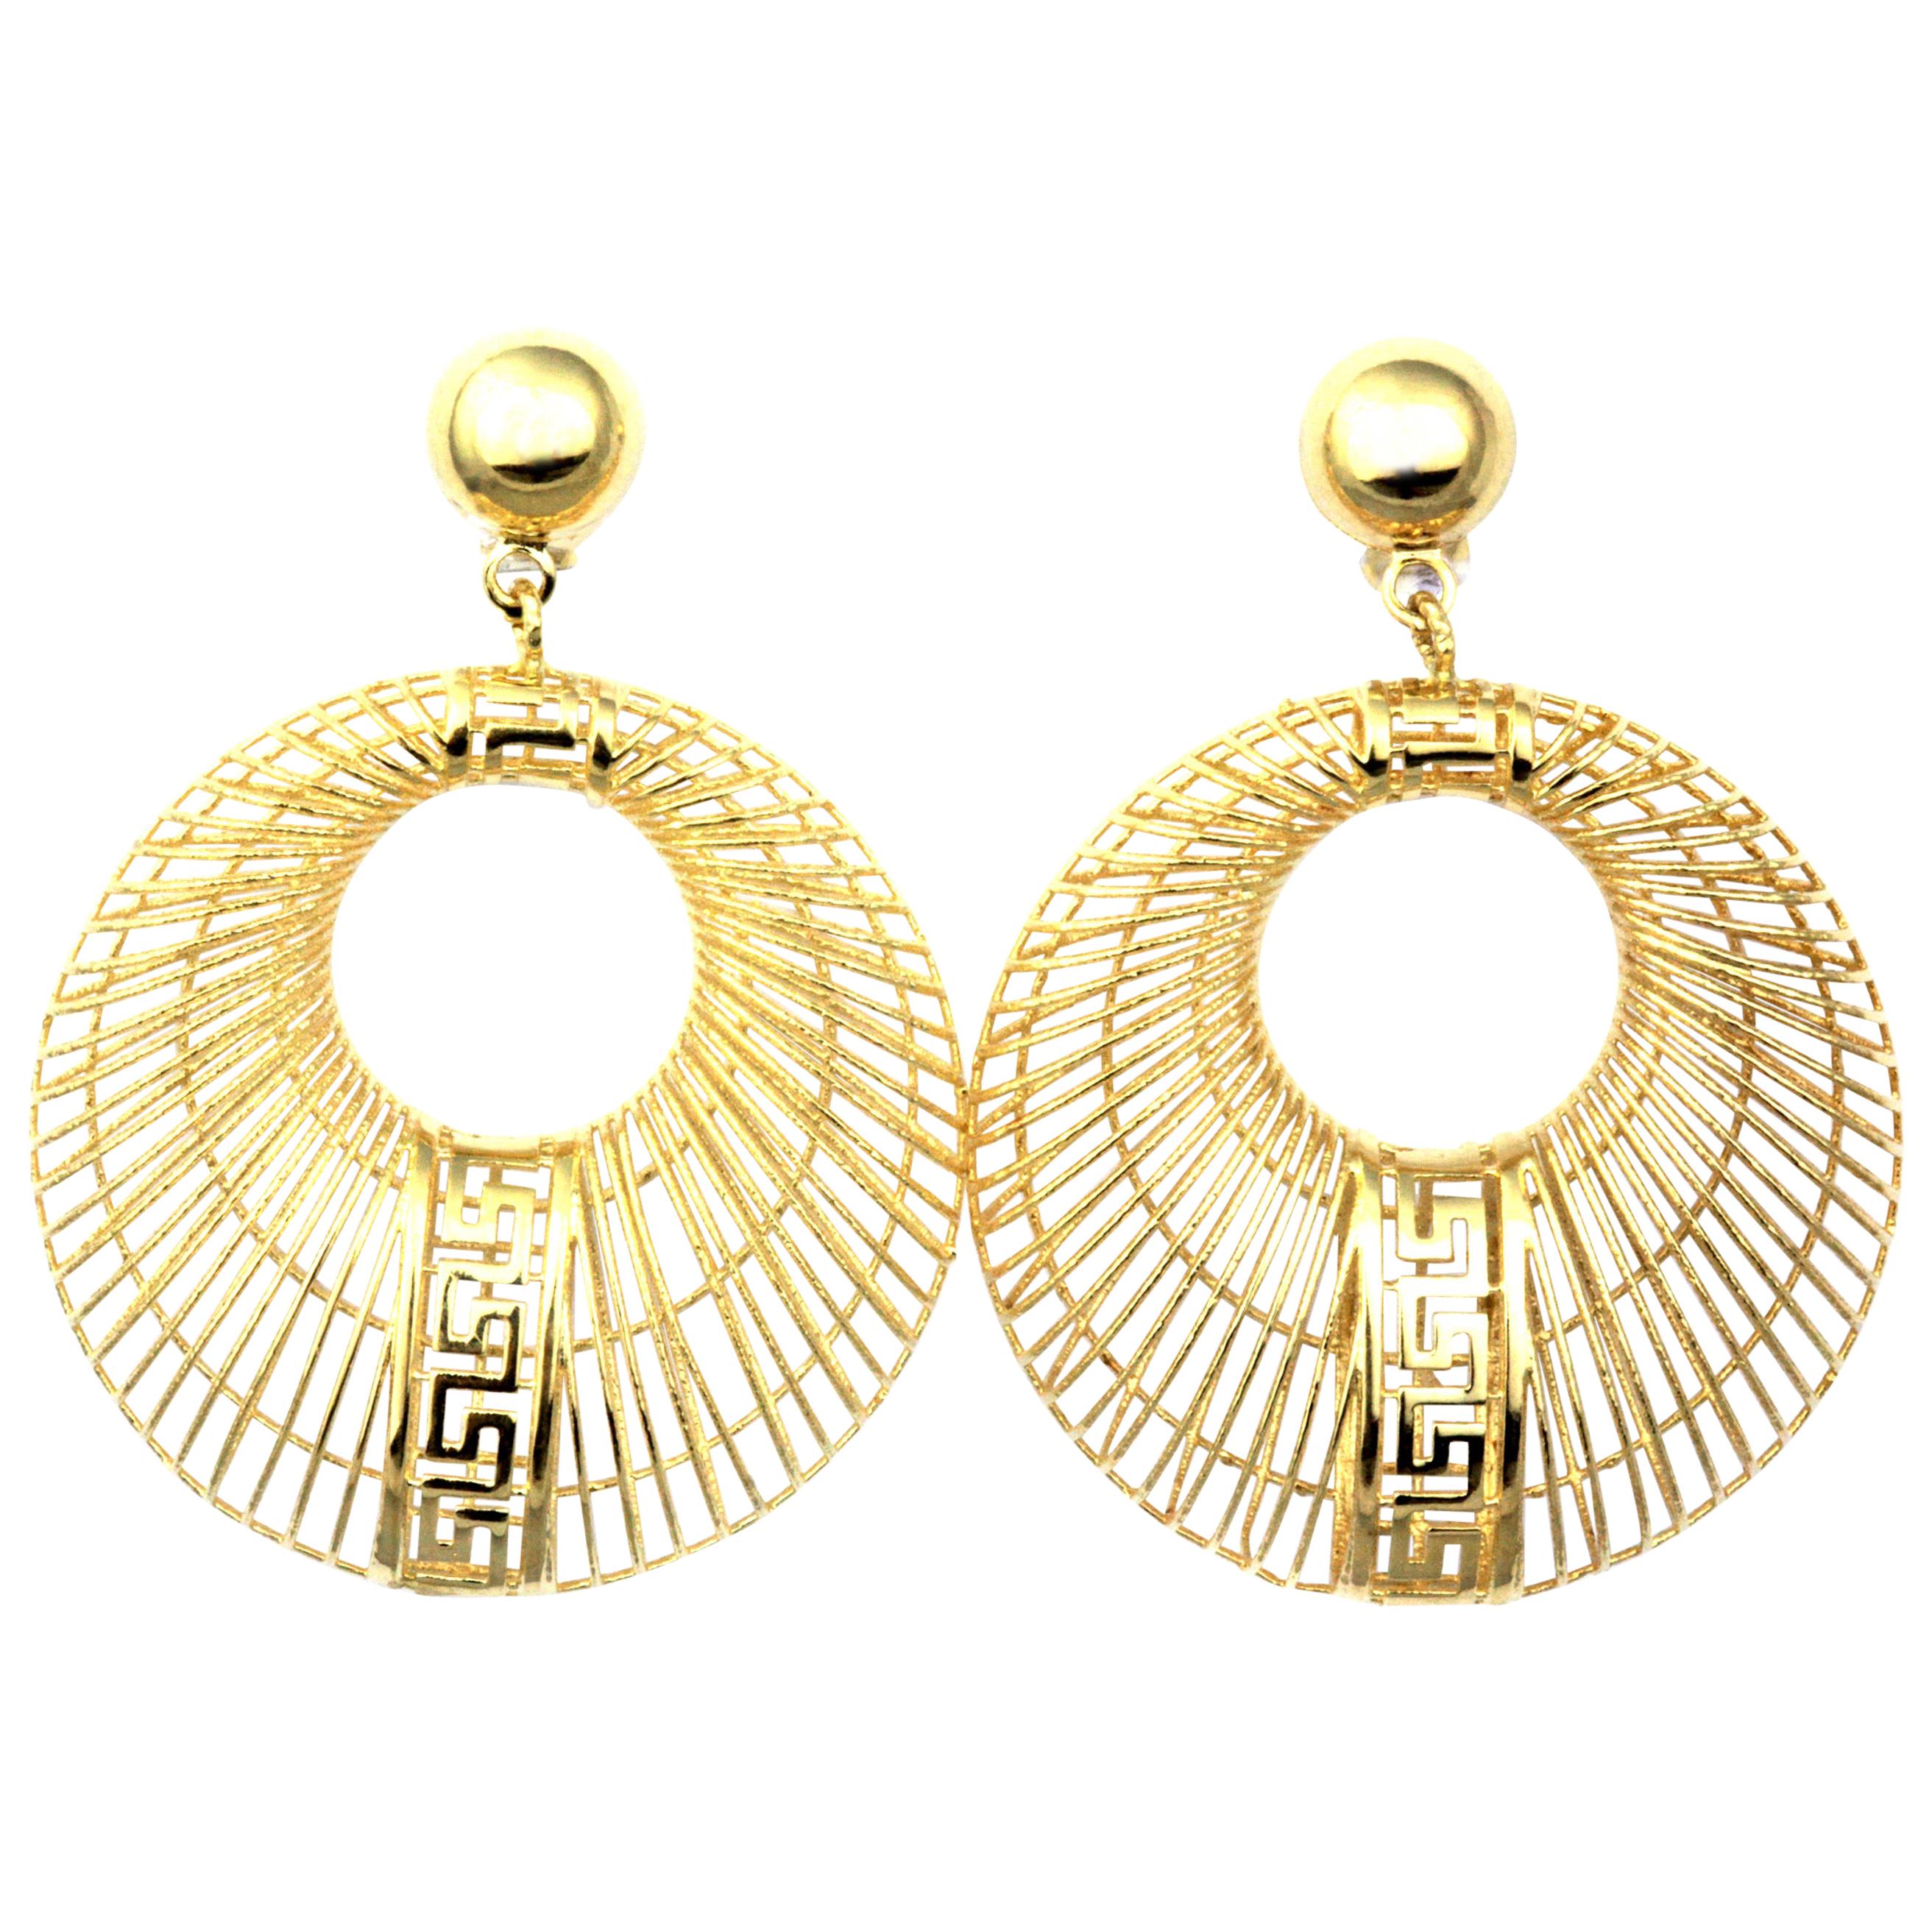 Pair of Earrings and Matching Pendant, Greek Key Design in 18 Karat Yellow Gold